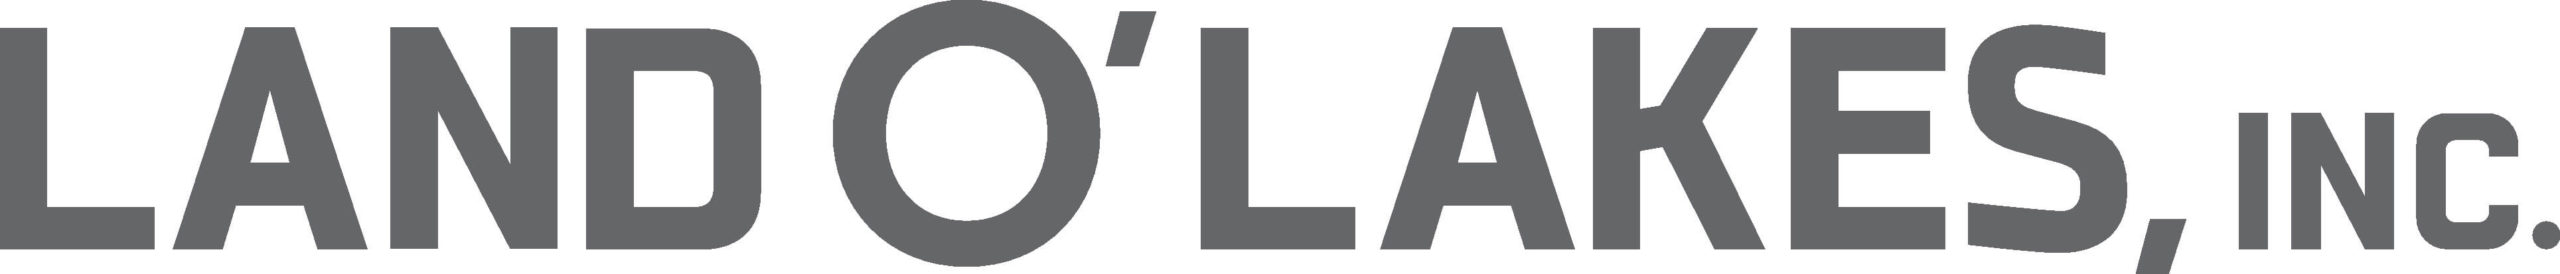 Land o lakes logo